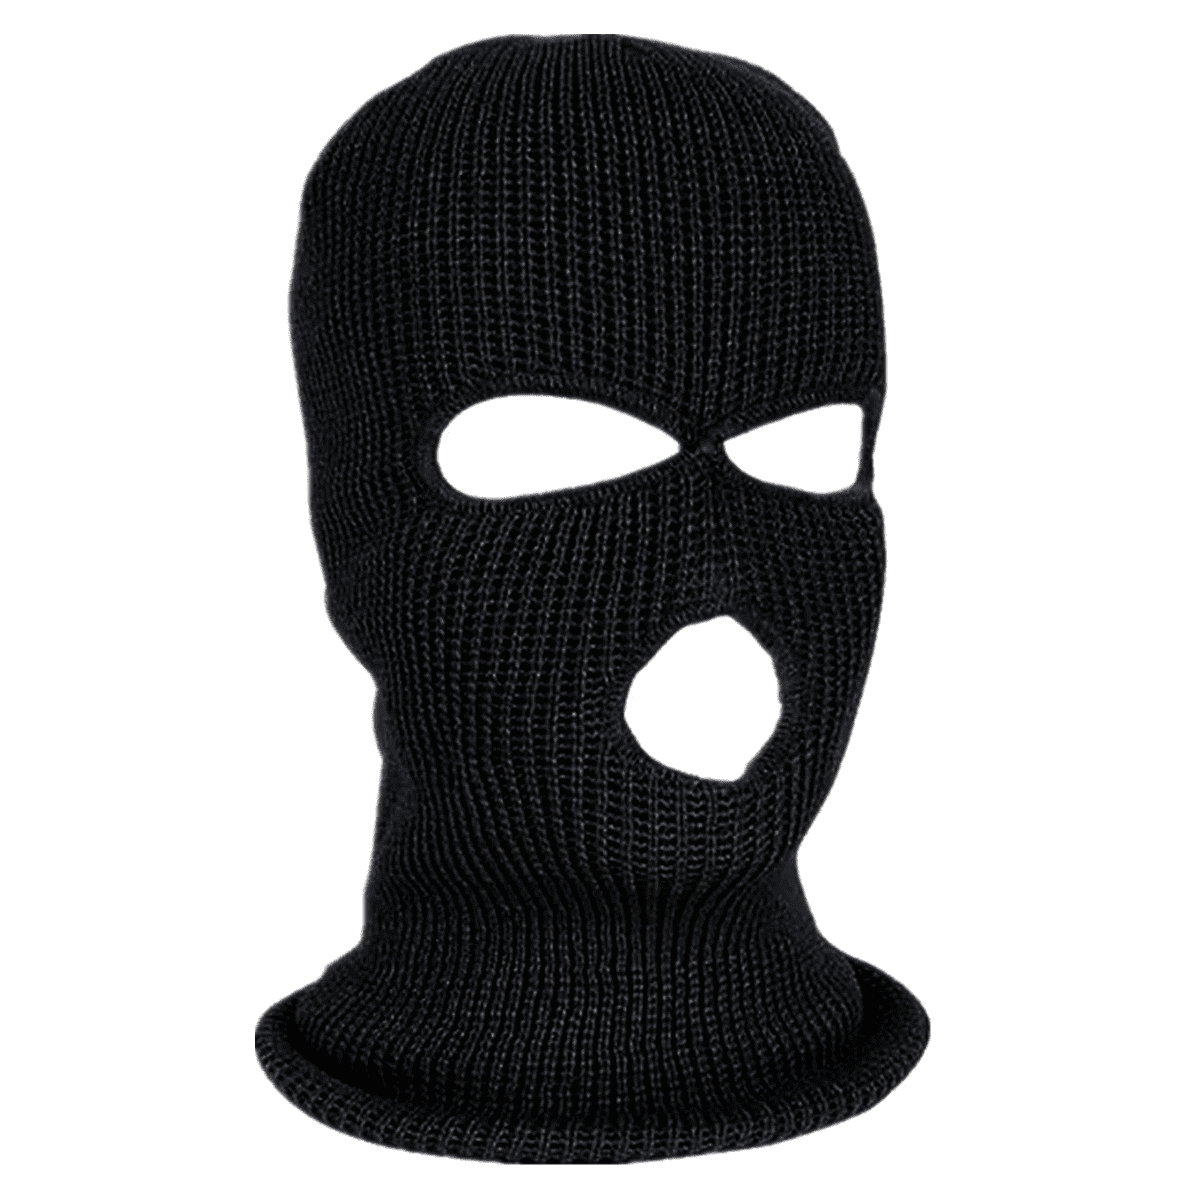 3 Holes Winter Knitted Full Face Mask Head Hood Warm Black Ski ...